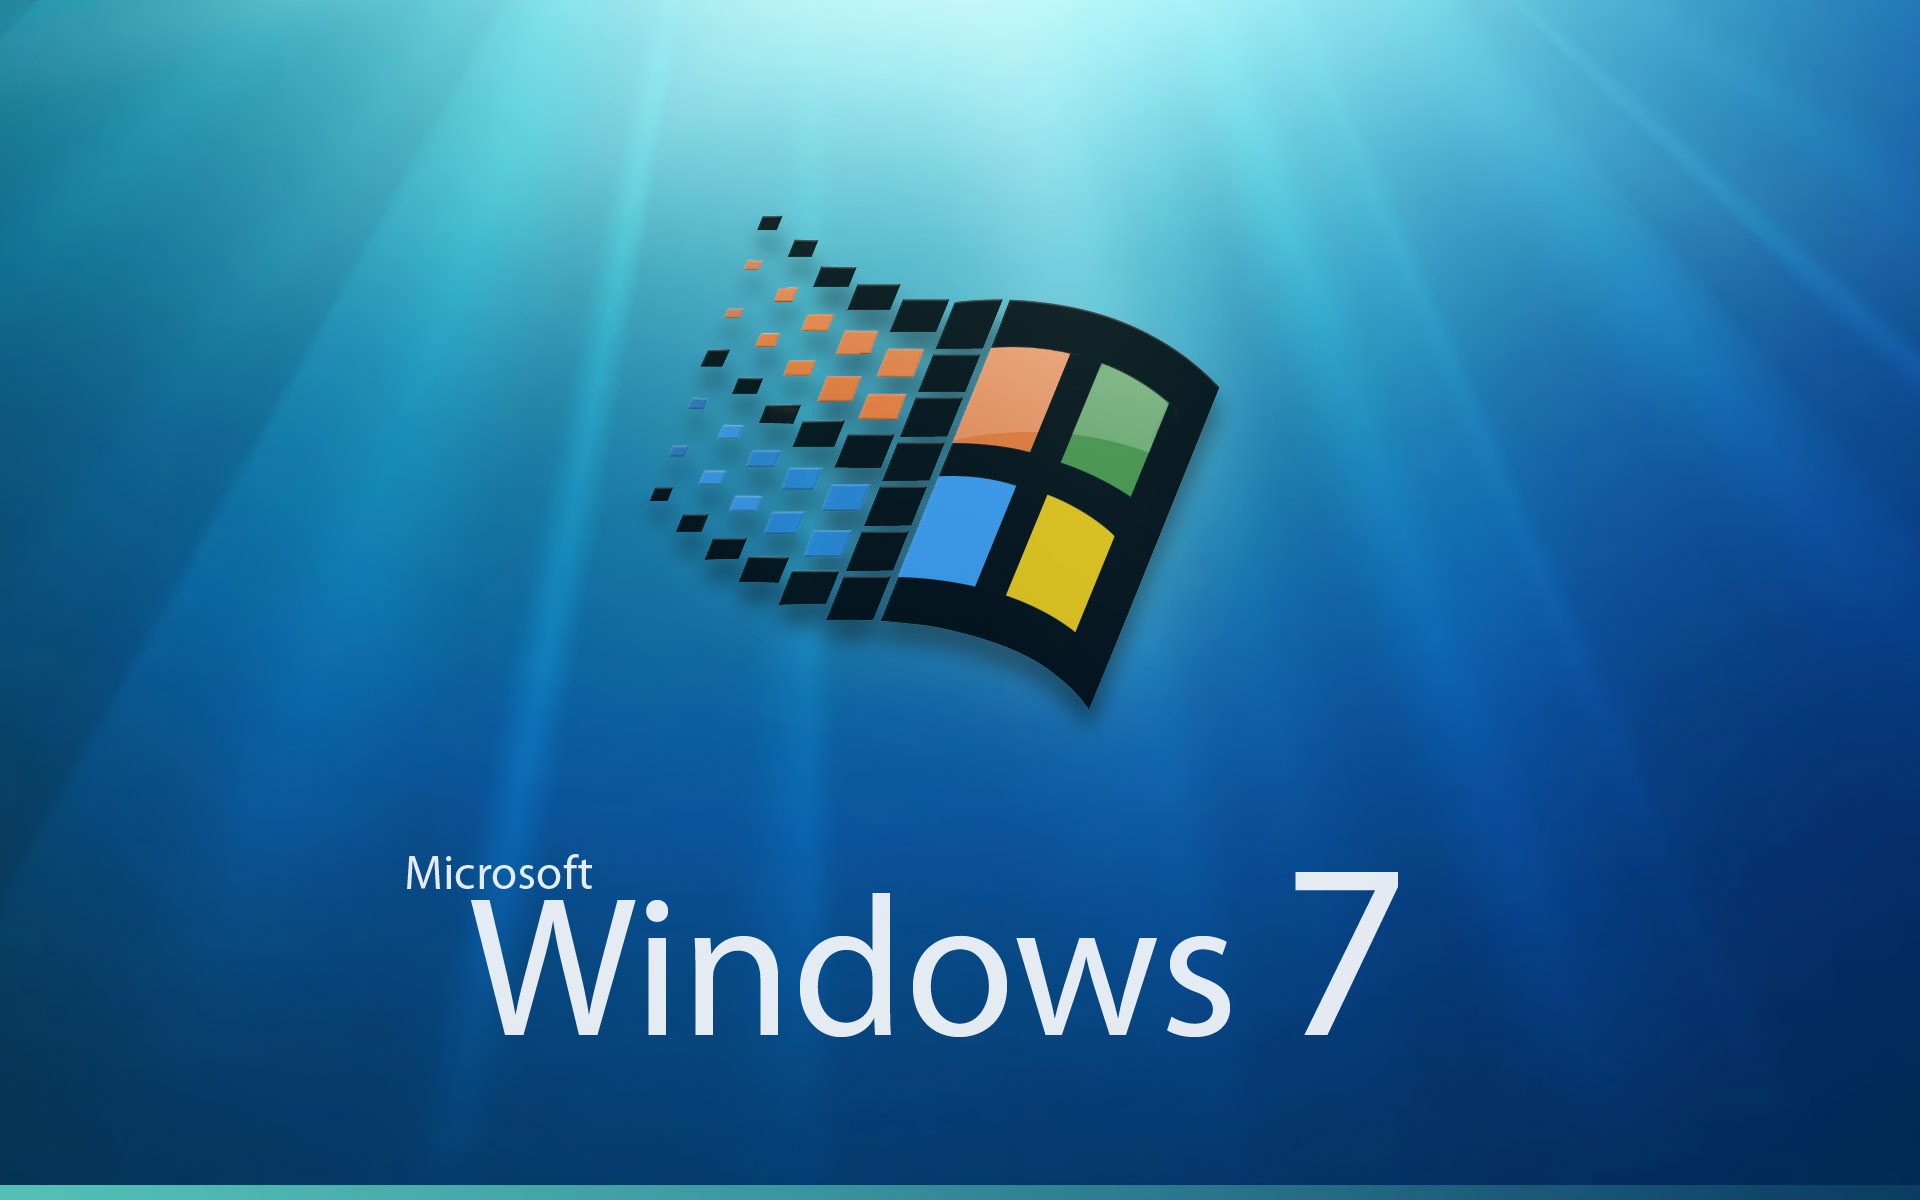 Fondos de escritorio de Windows7 #1 - 1920x1200